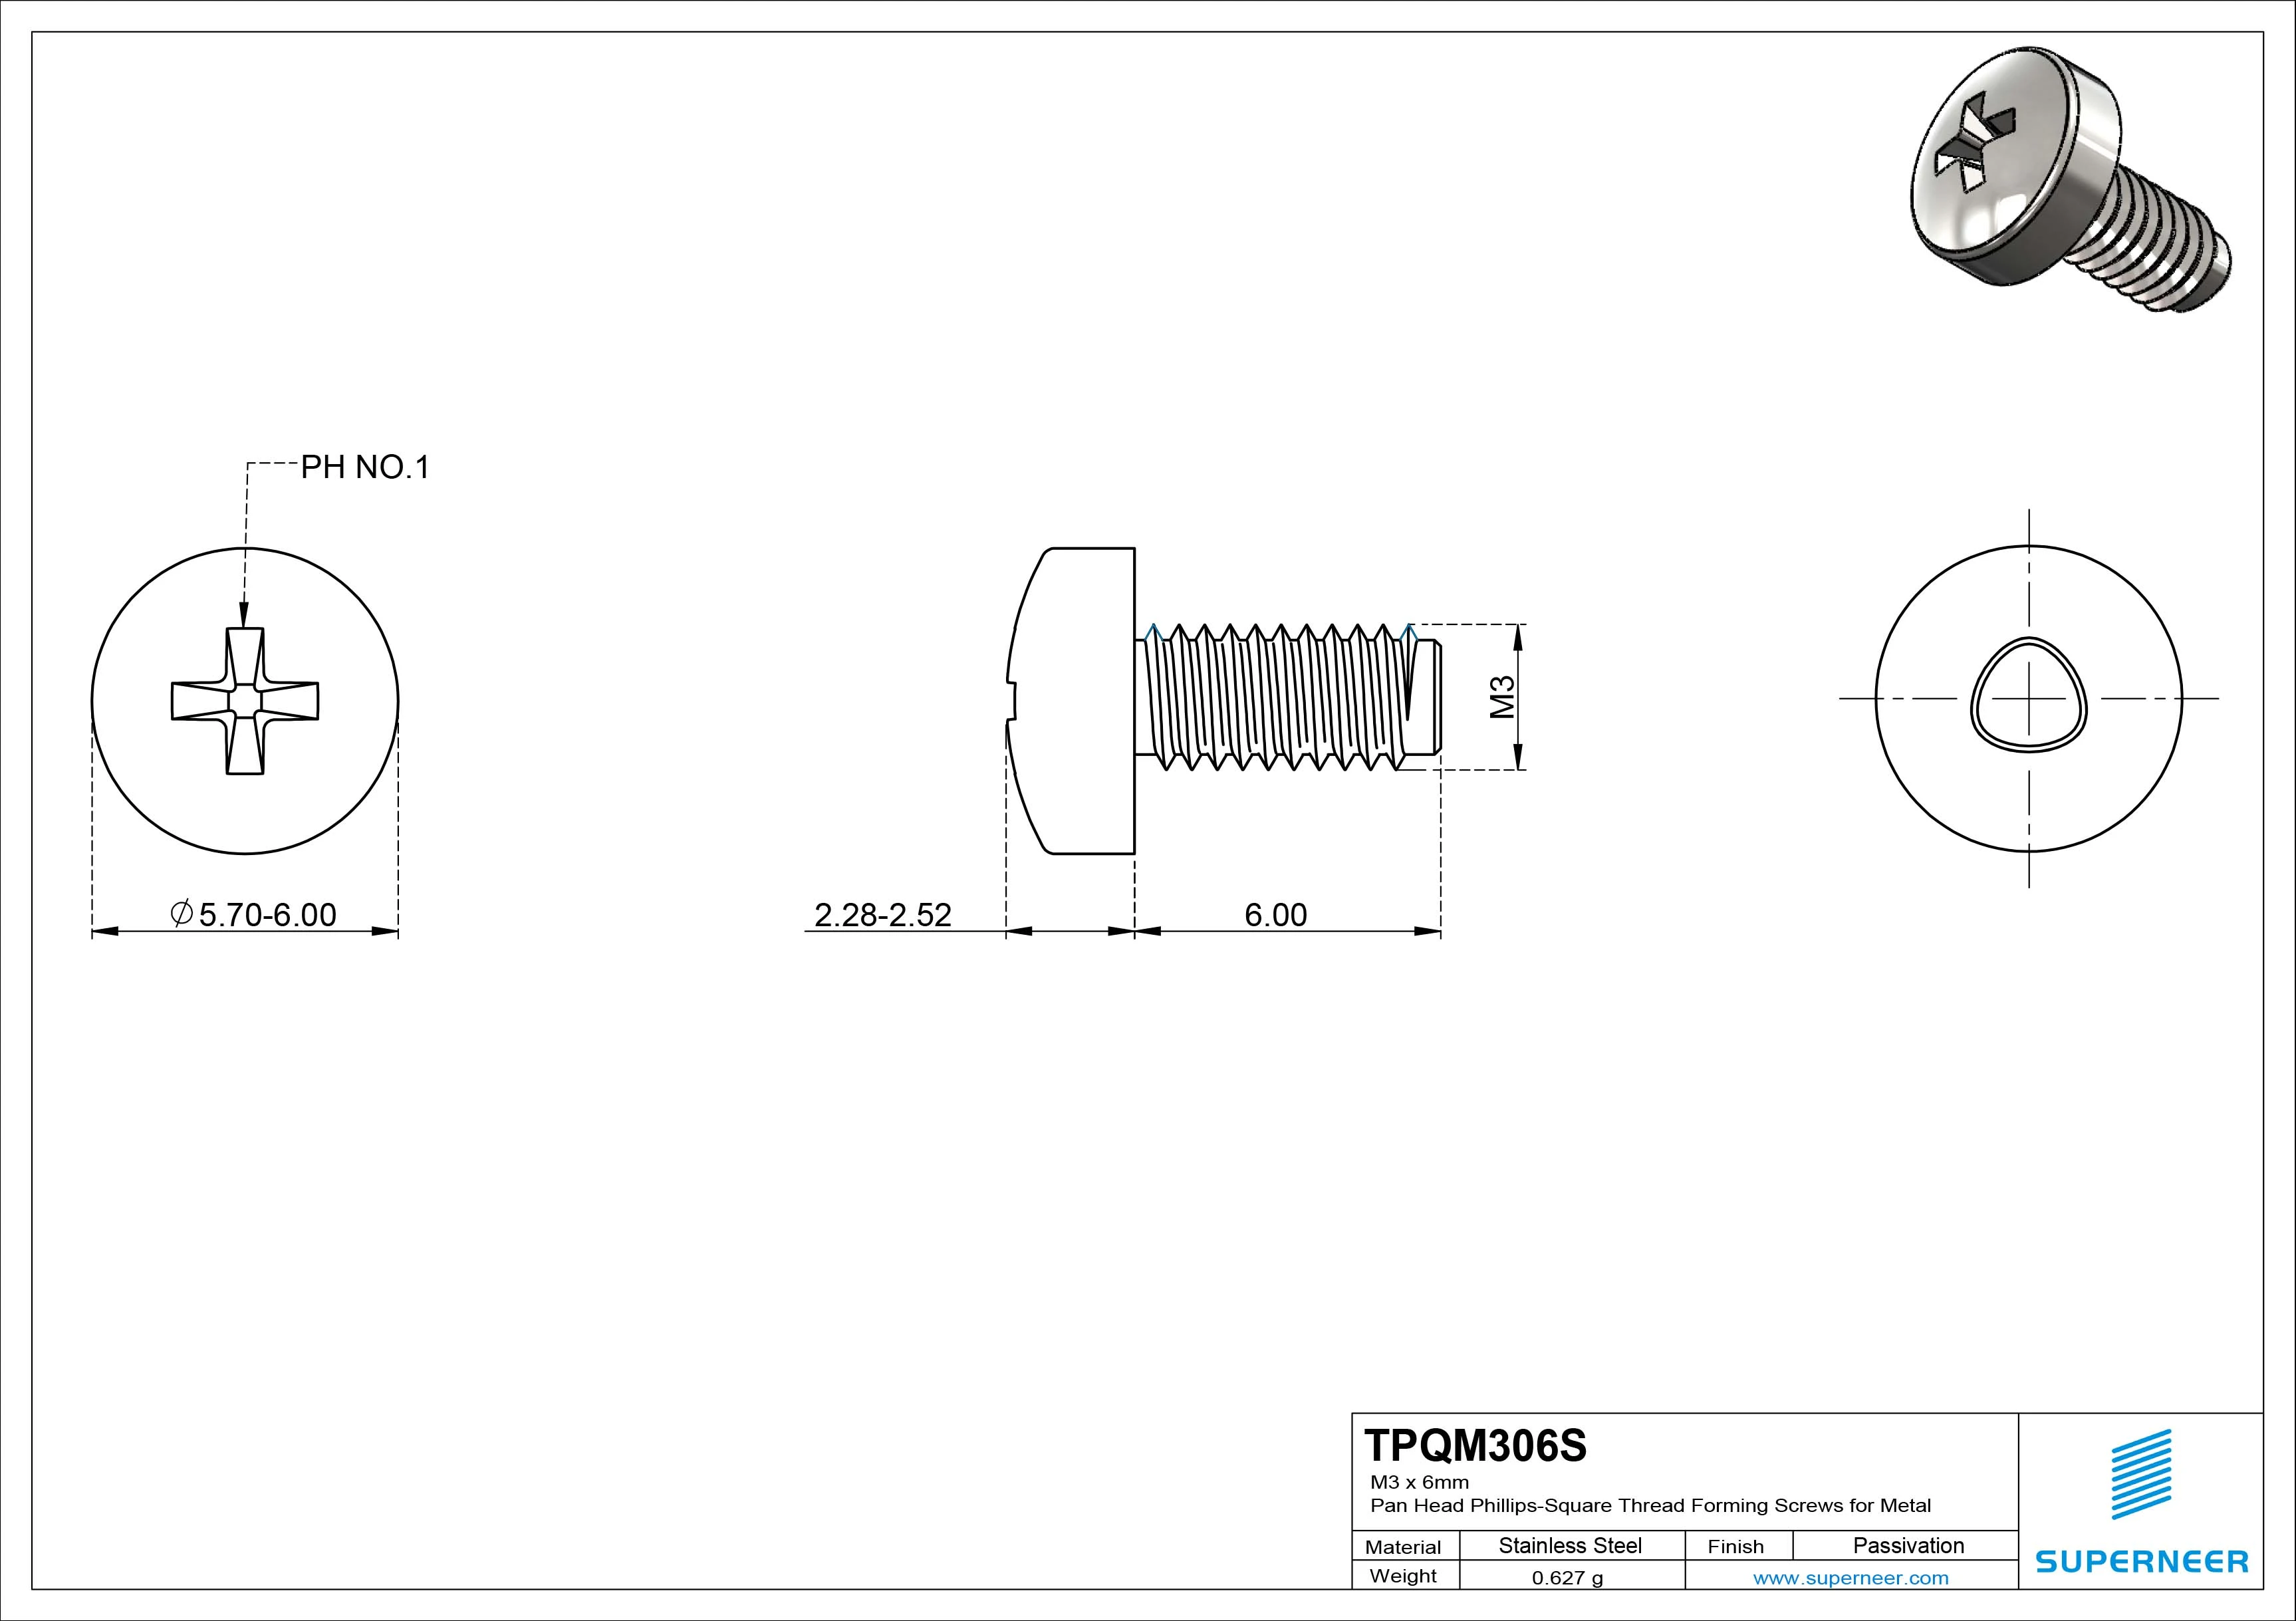 M3 × 6mm Pan Head Phillips-Square Thread Forming Screws for Metal SUS304 Stainless Steel Inox